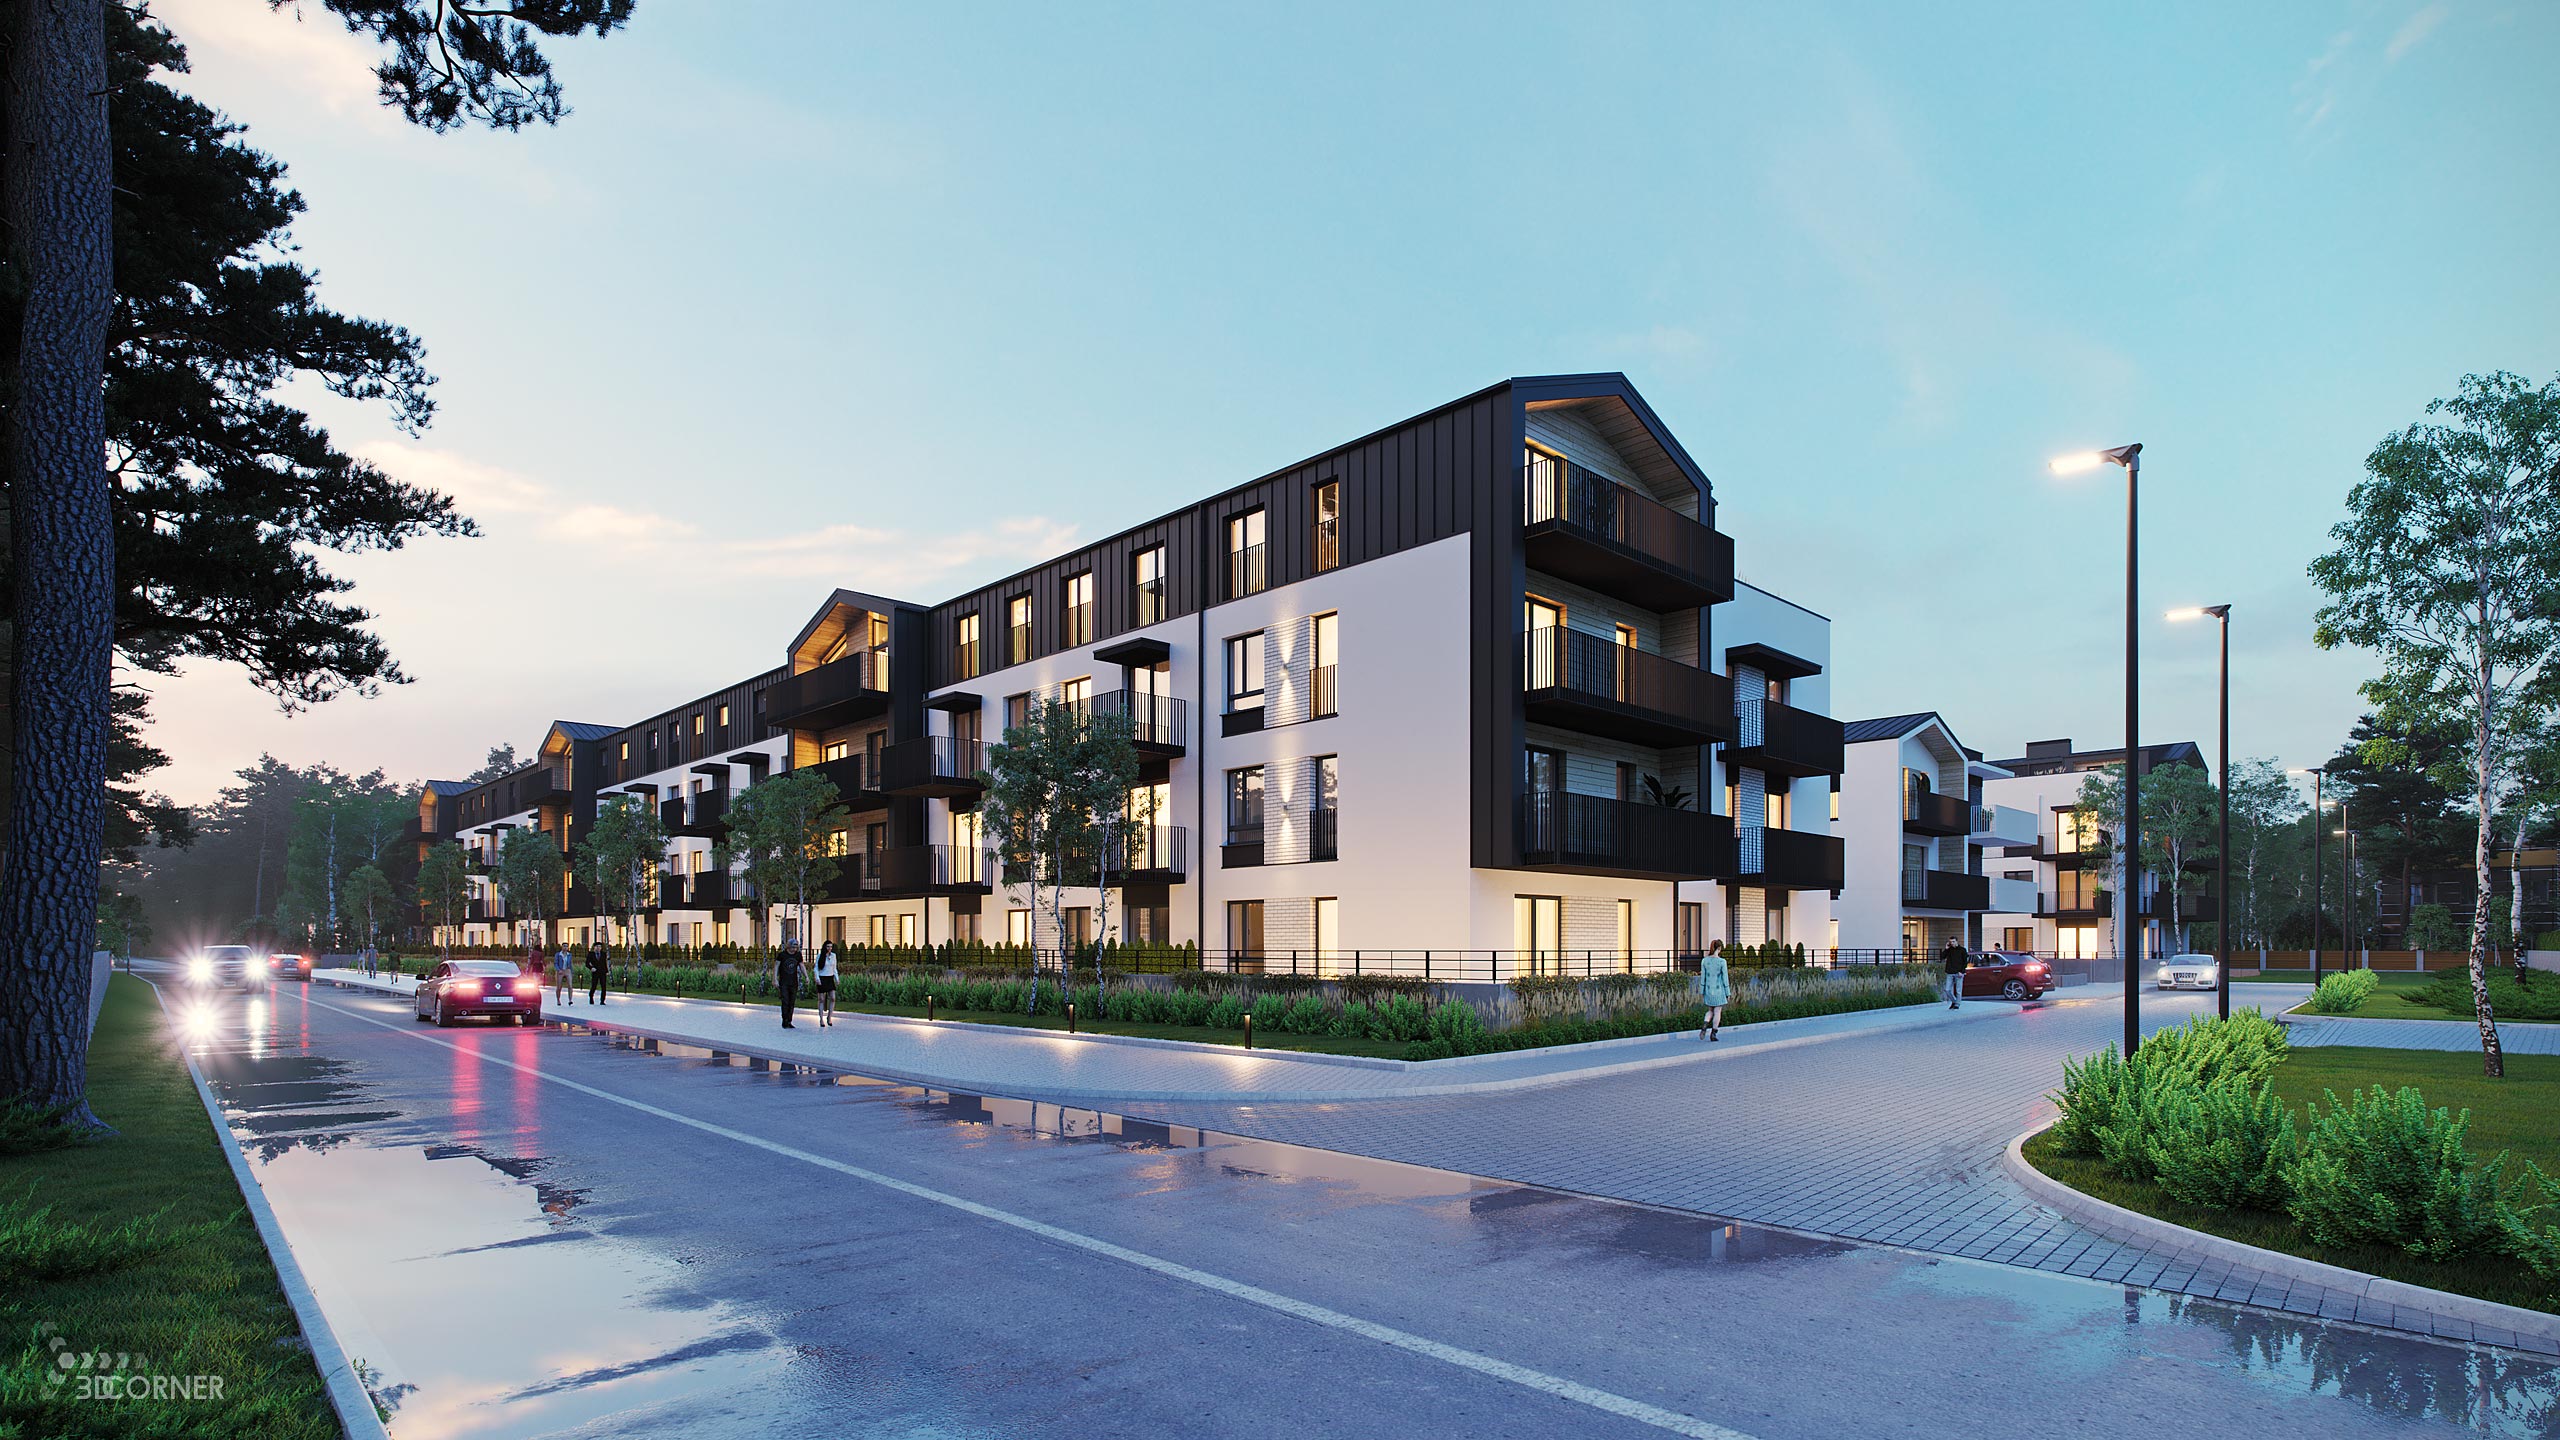 visualization 3d rendering architectural archviz residential contenporary night corner